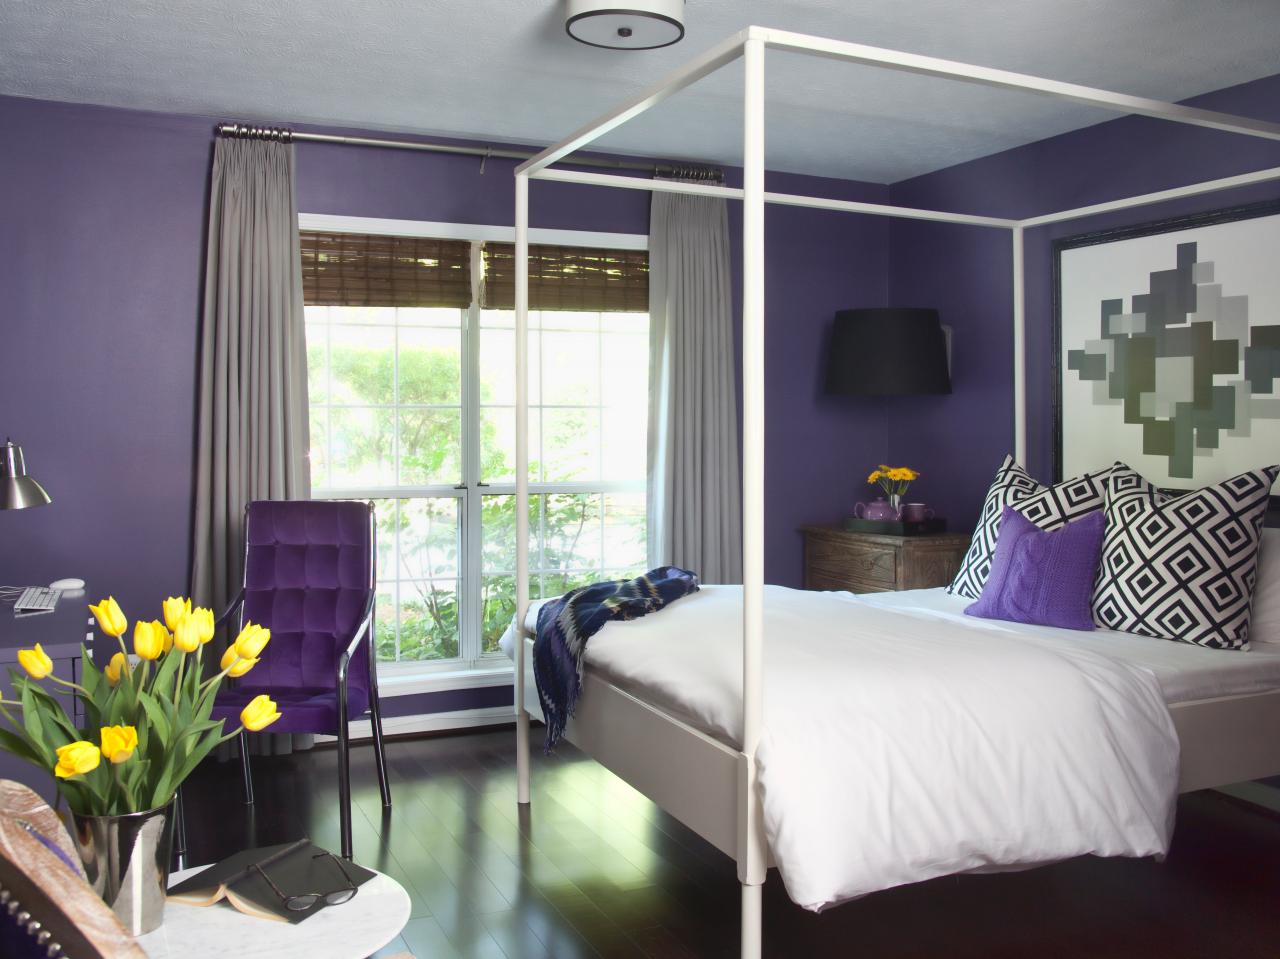 A splash of regal purple for the bedroom!